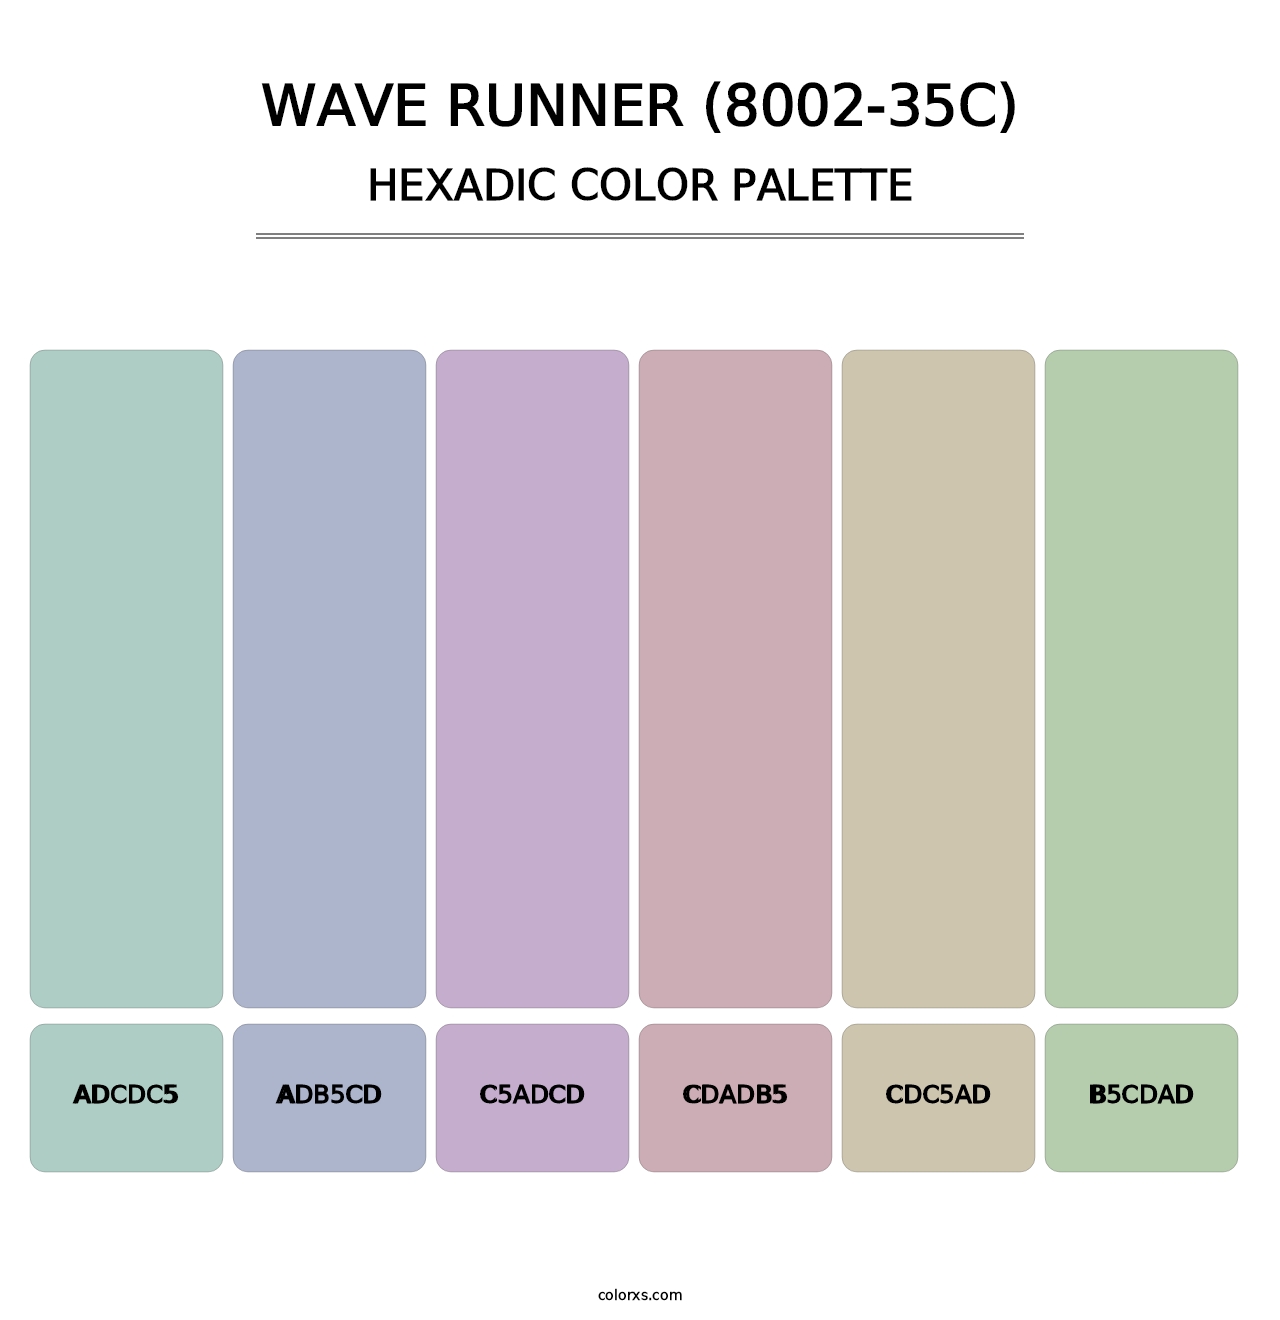 Wave Runner (8002-35C) - Hexadic Color Palette